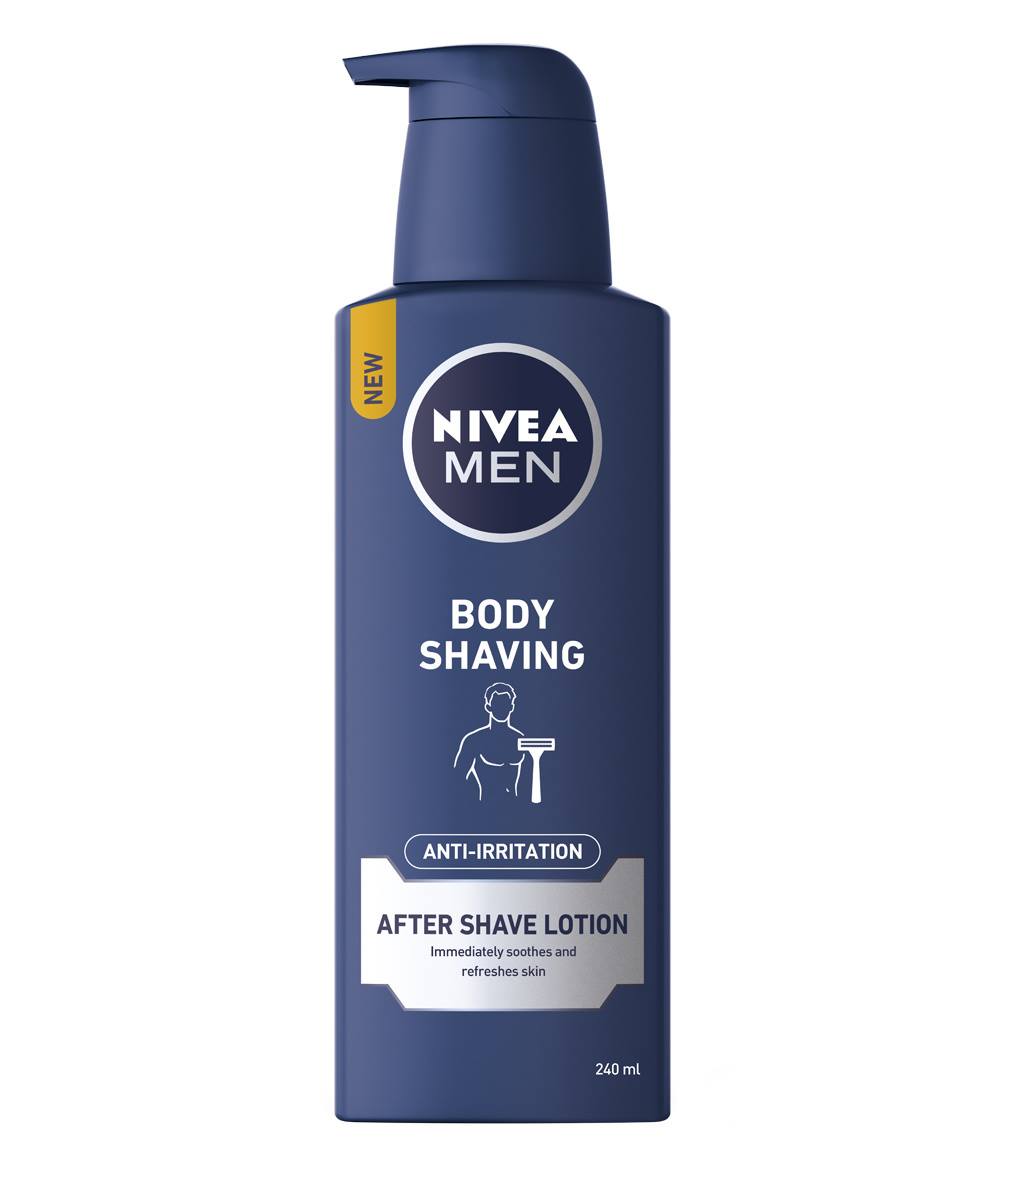 Shaving and Personal Care Products Logo - NIVEA MEN ANTI IRRITATION